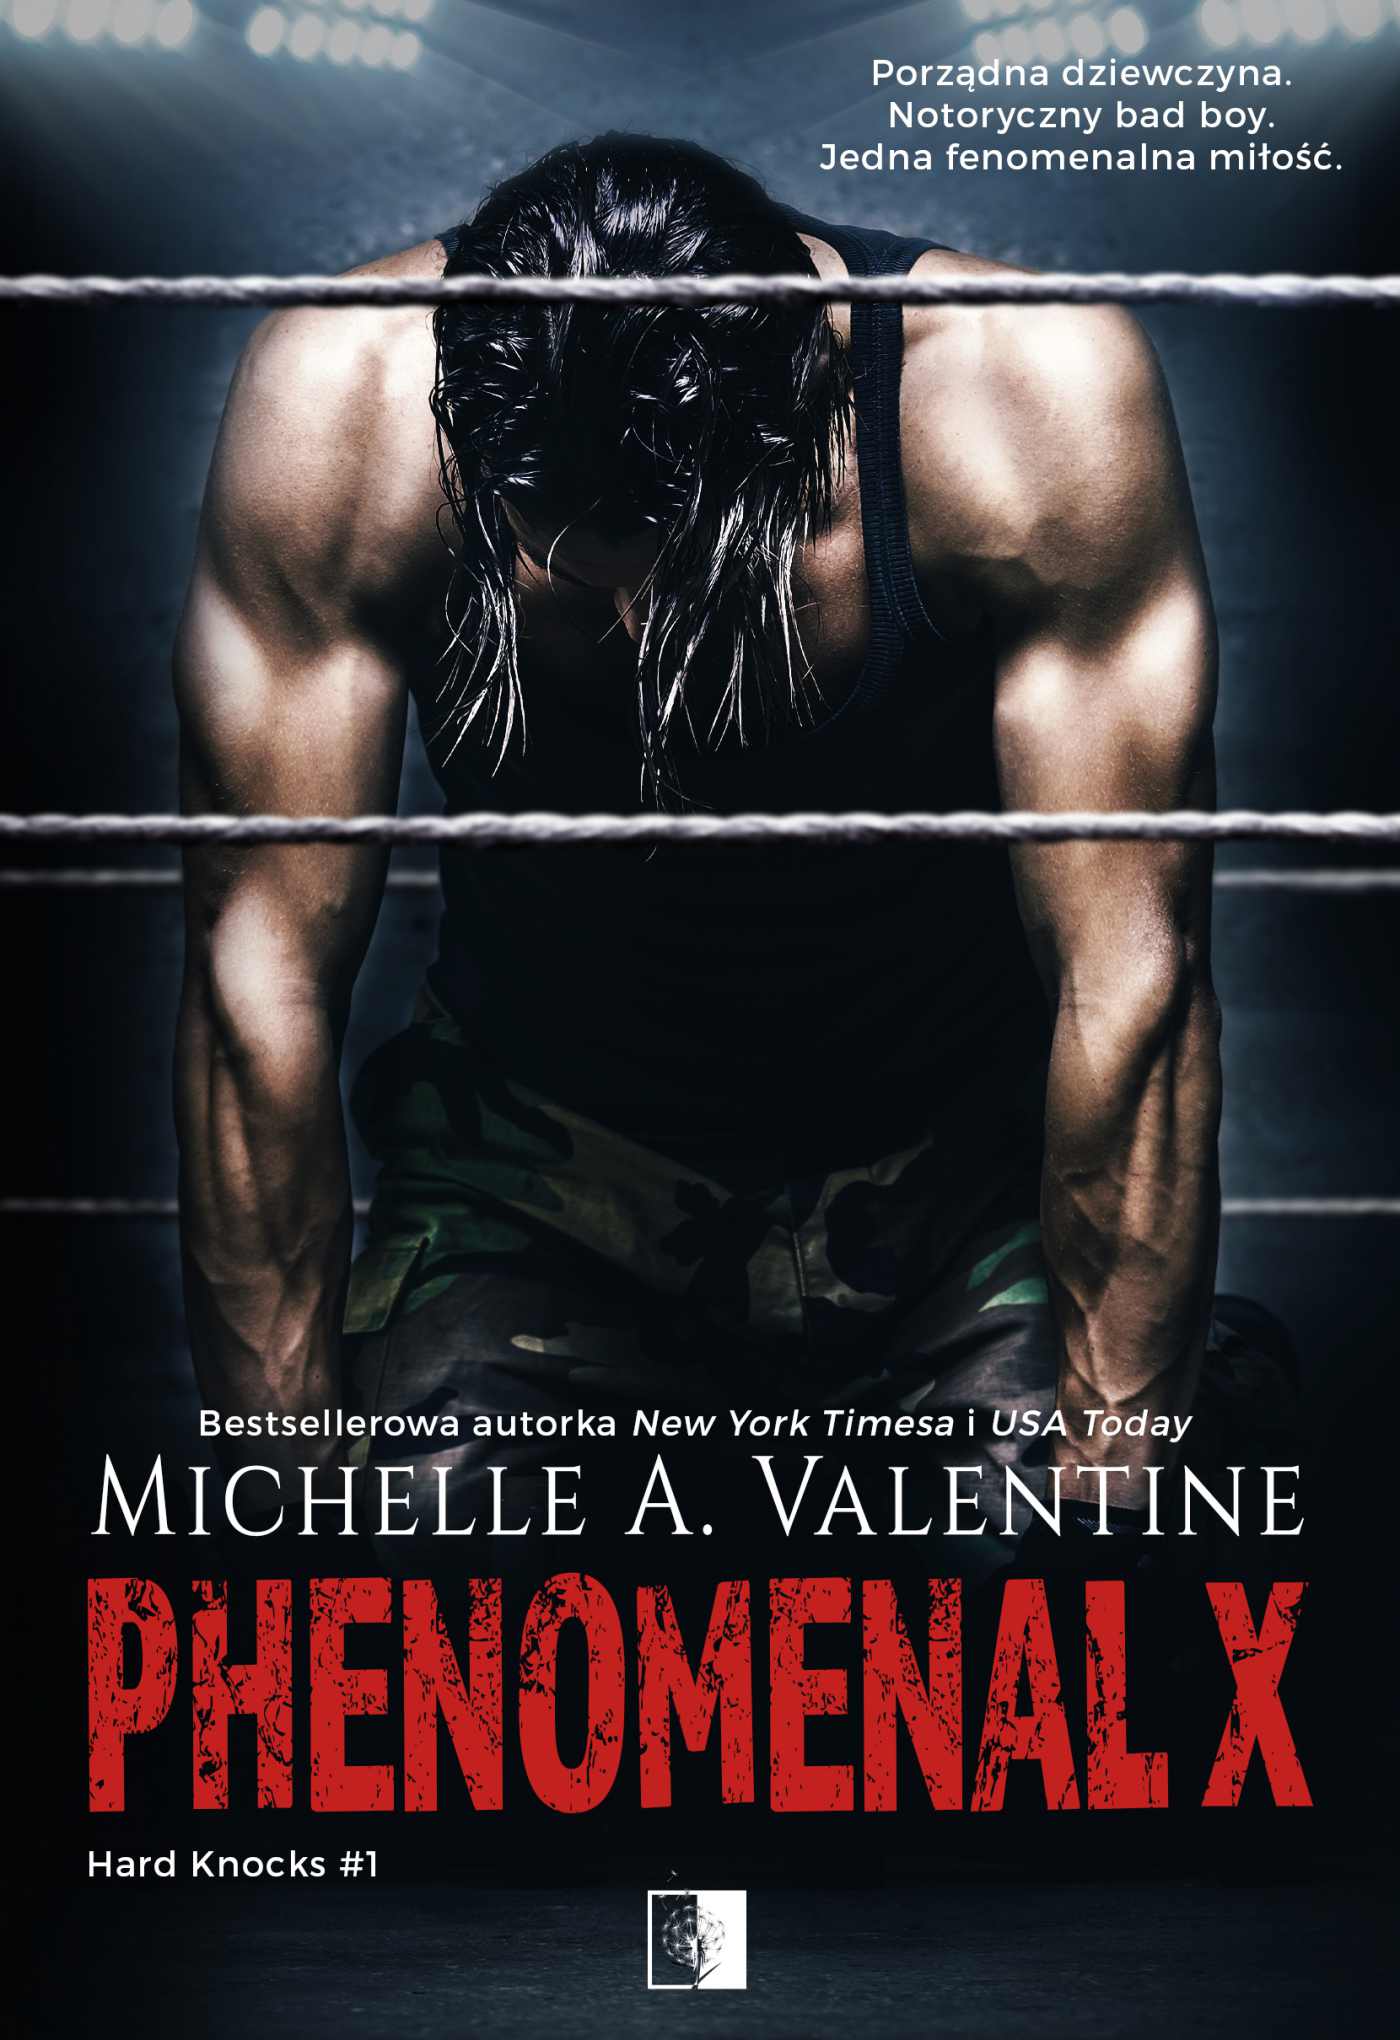 Phenomenal X by Michelle A. Valentine